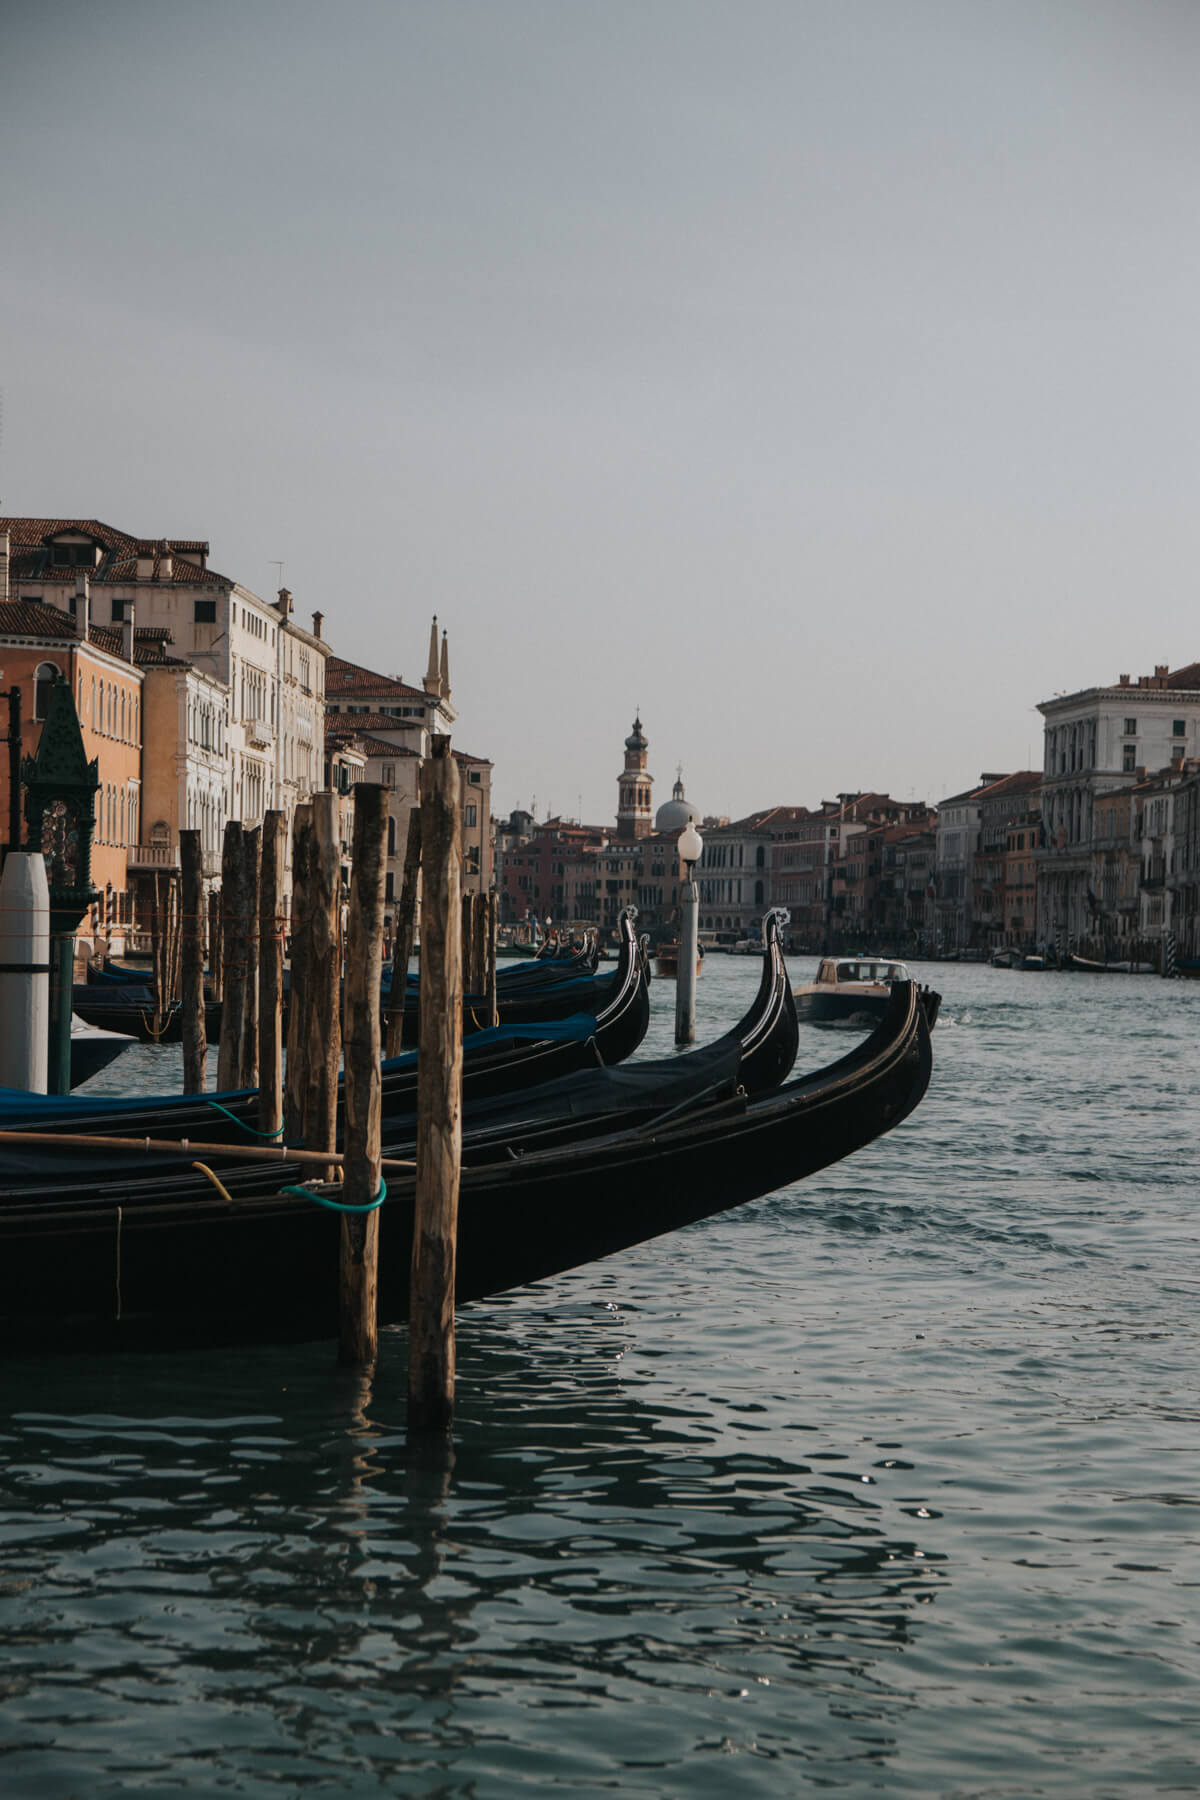 Views in Venice